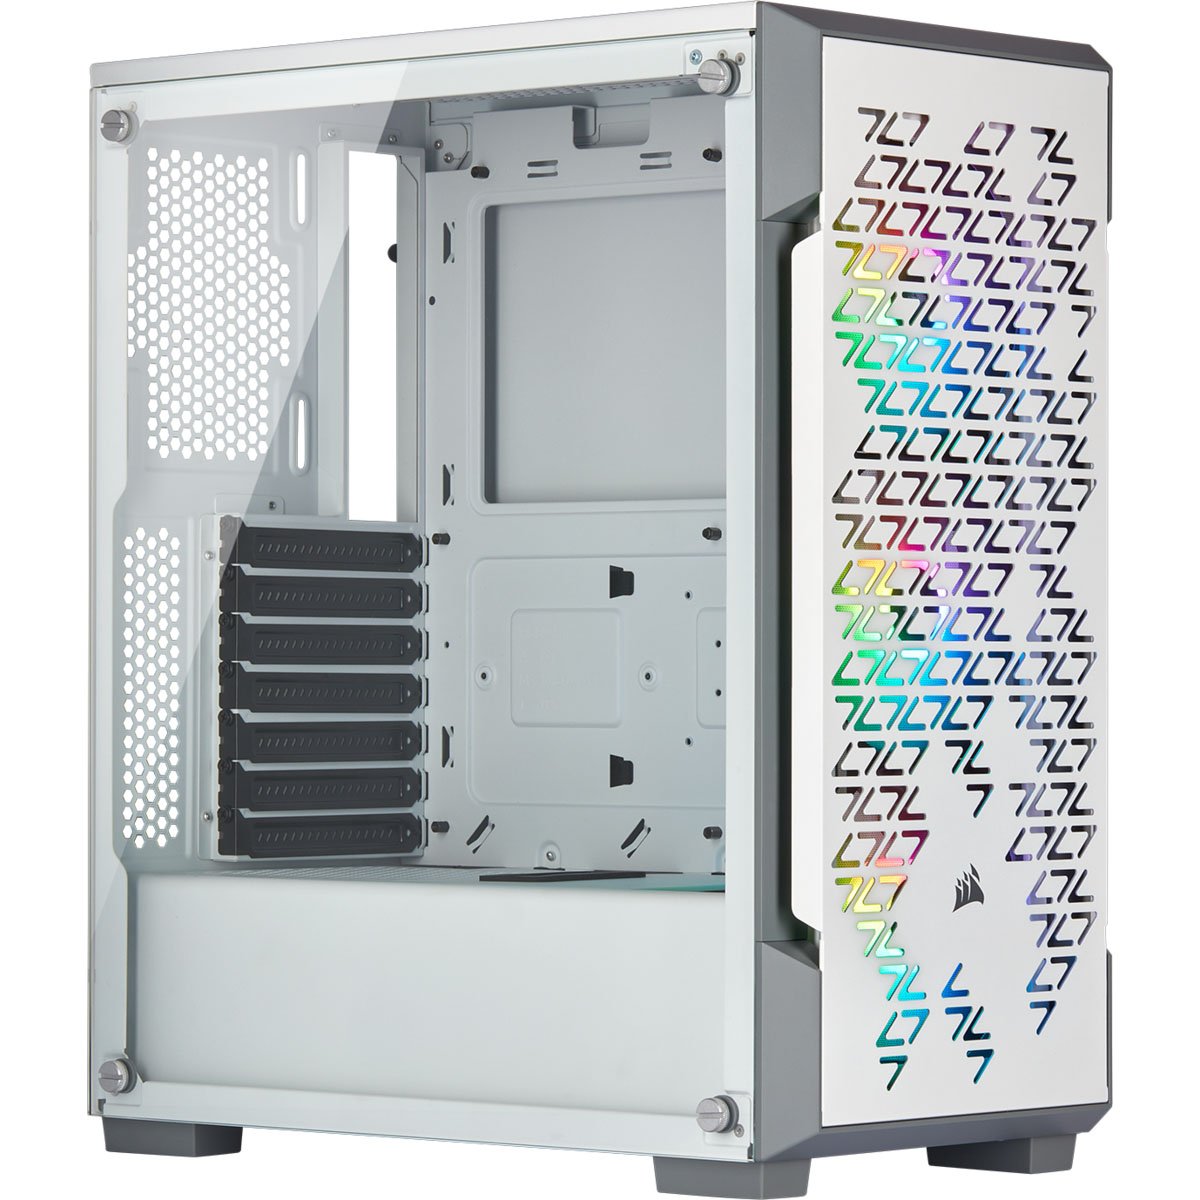 CORSAIR iCUE 2000D Airflow Blanc Boitier PC Mini tour - Mini ITX